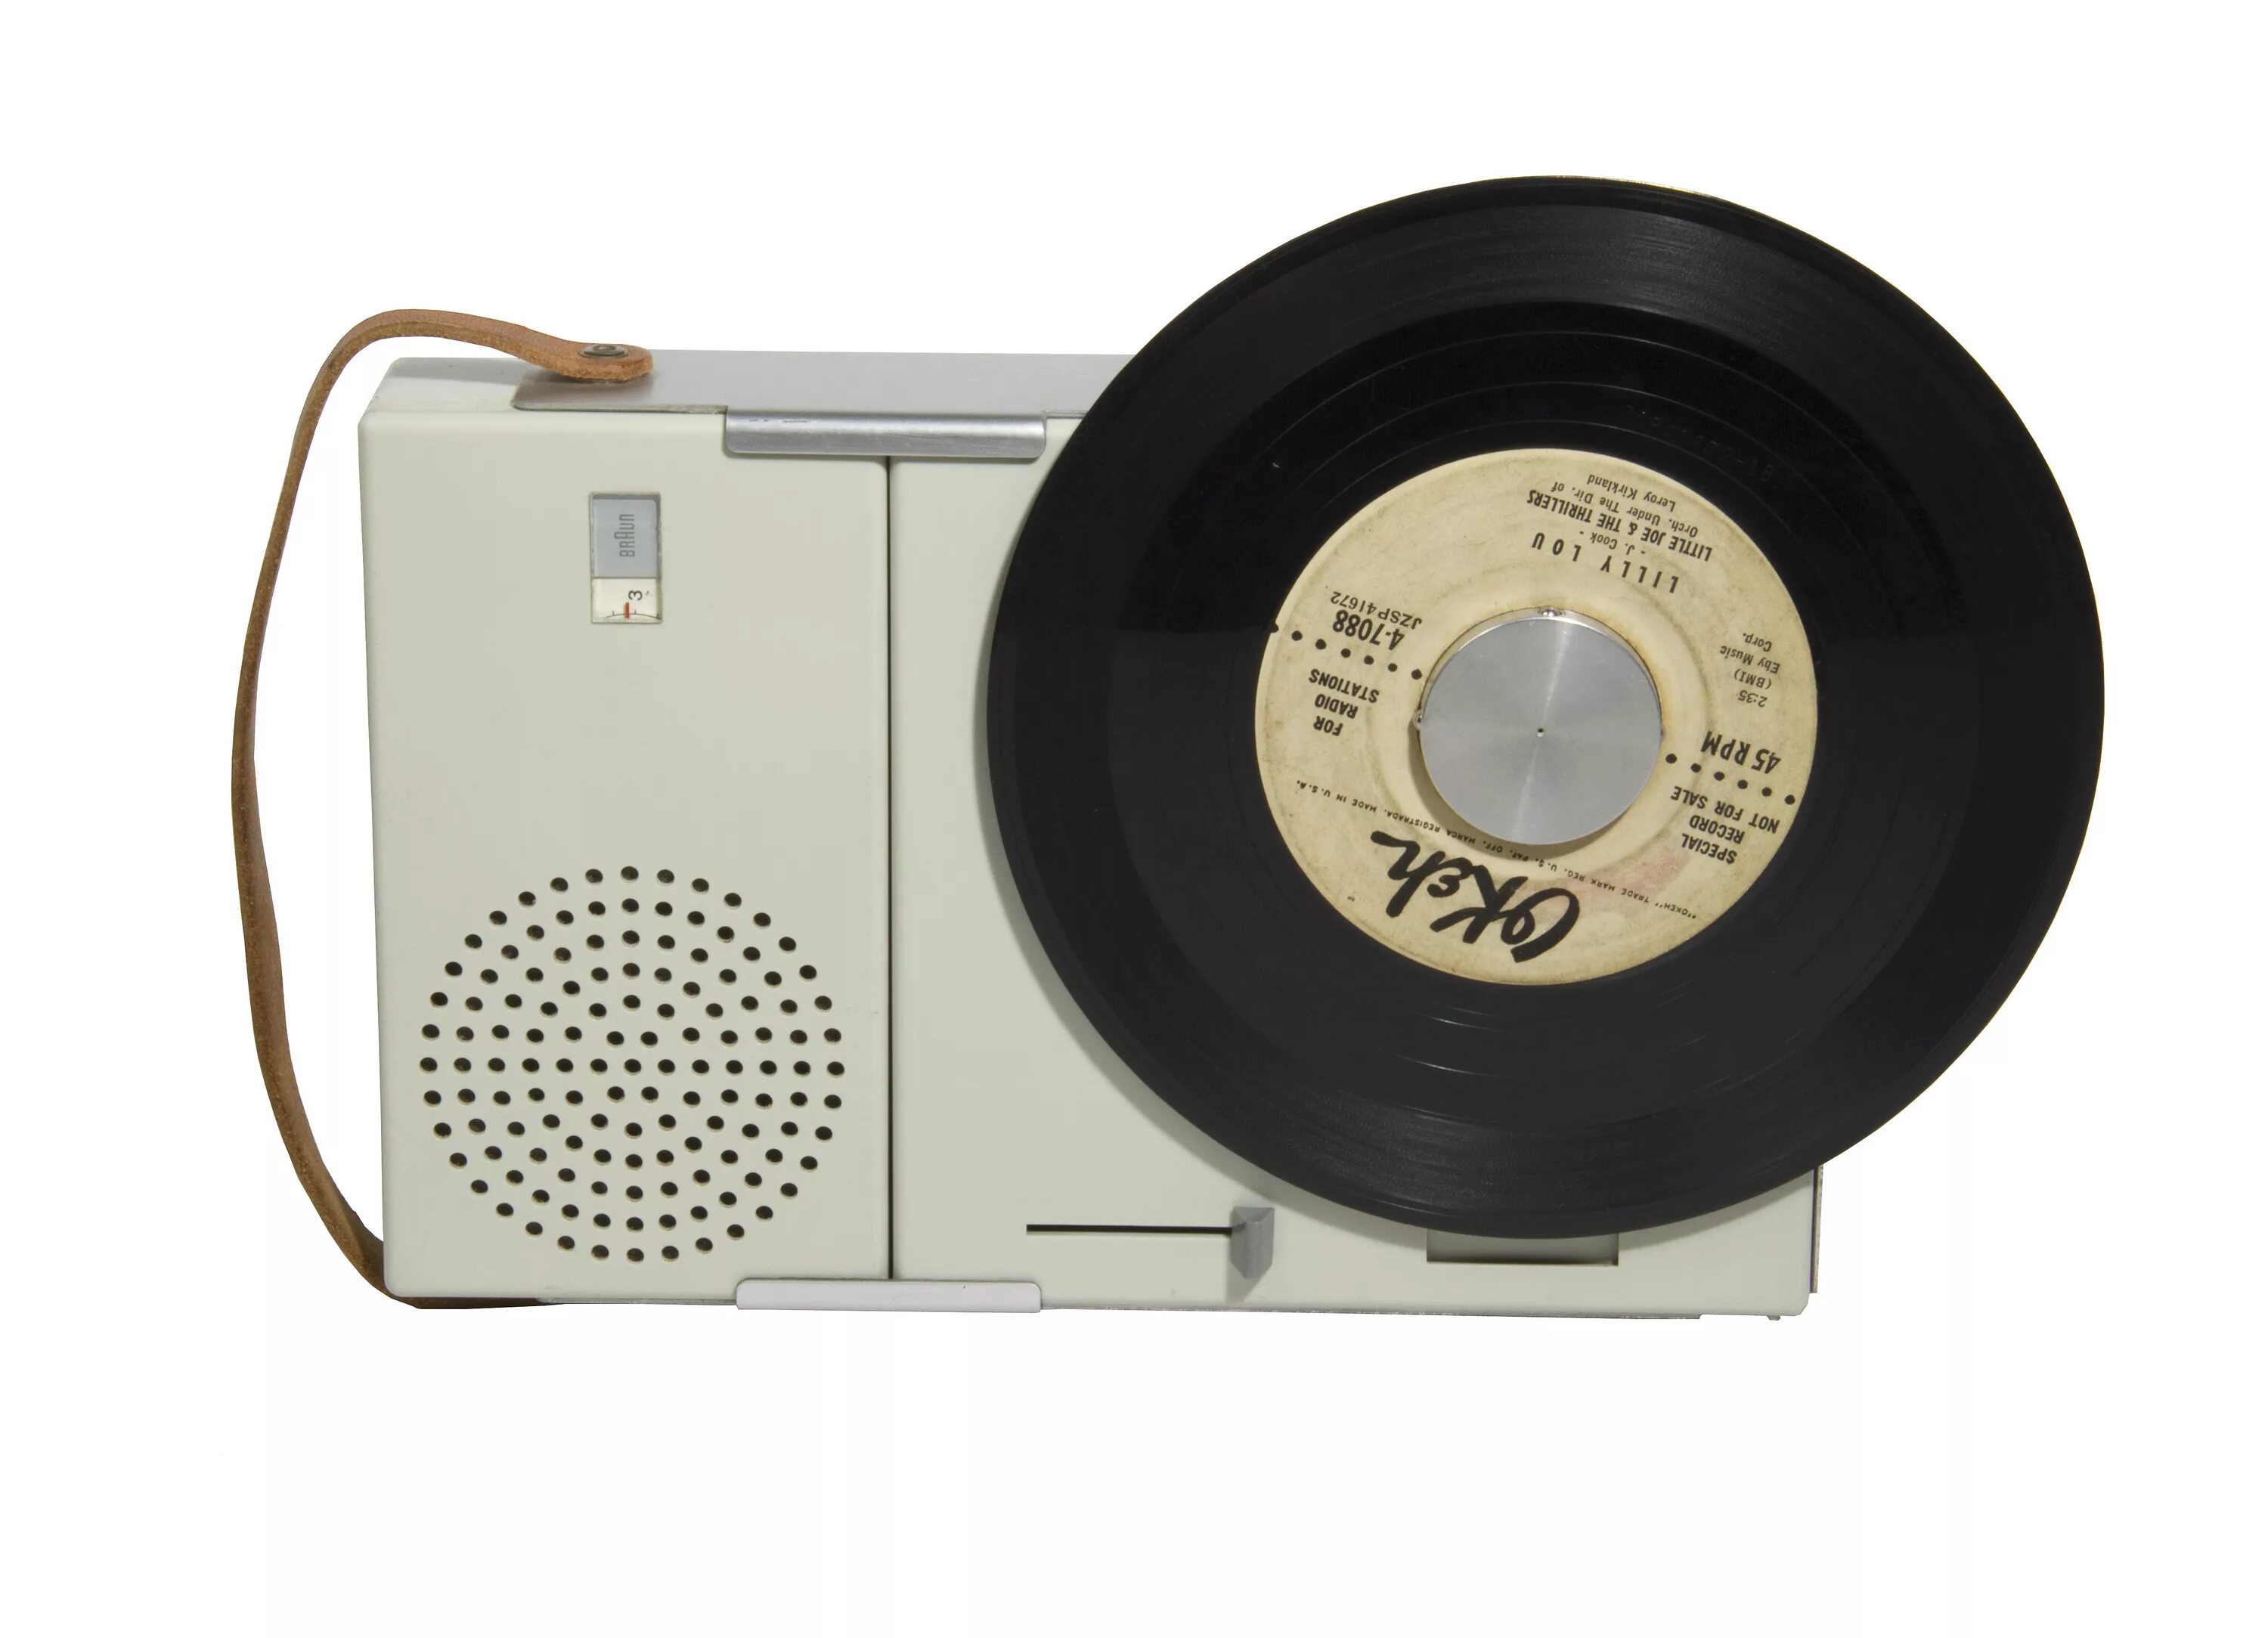 Brown story. Braun Дитер Рамс. Плеер Дитер Рамс. Радио Braun tp1 (1959). Дитер Рамс радиоприемник.